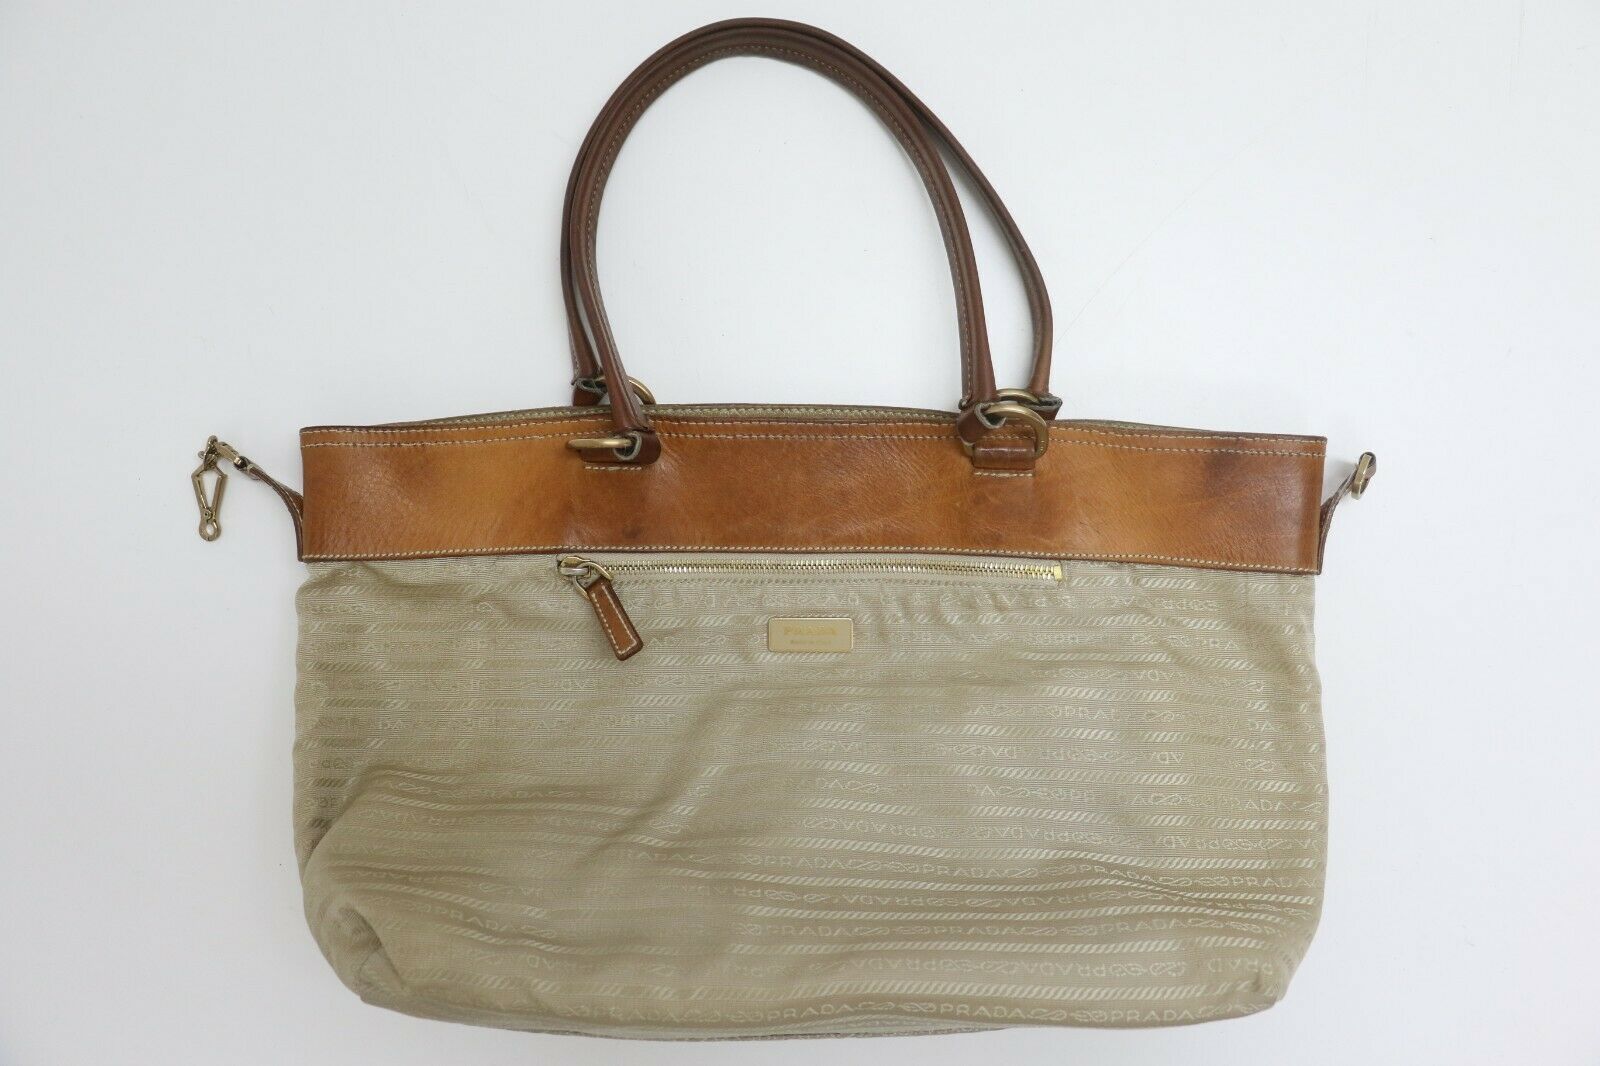 Coach green leather handbag - Gem